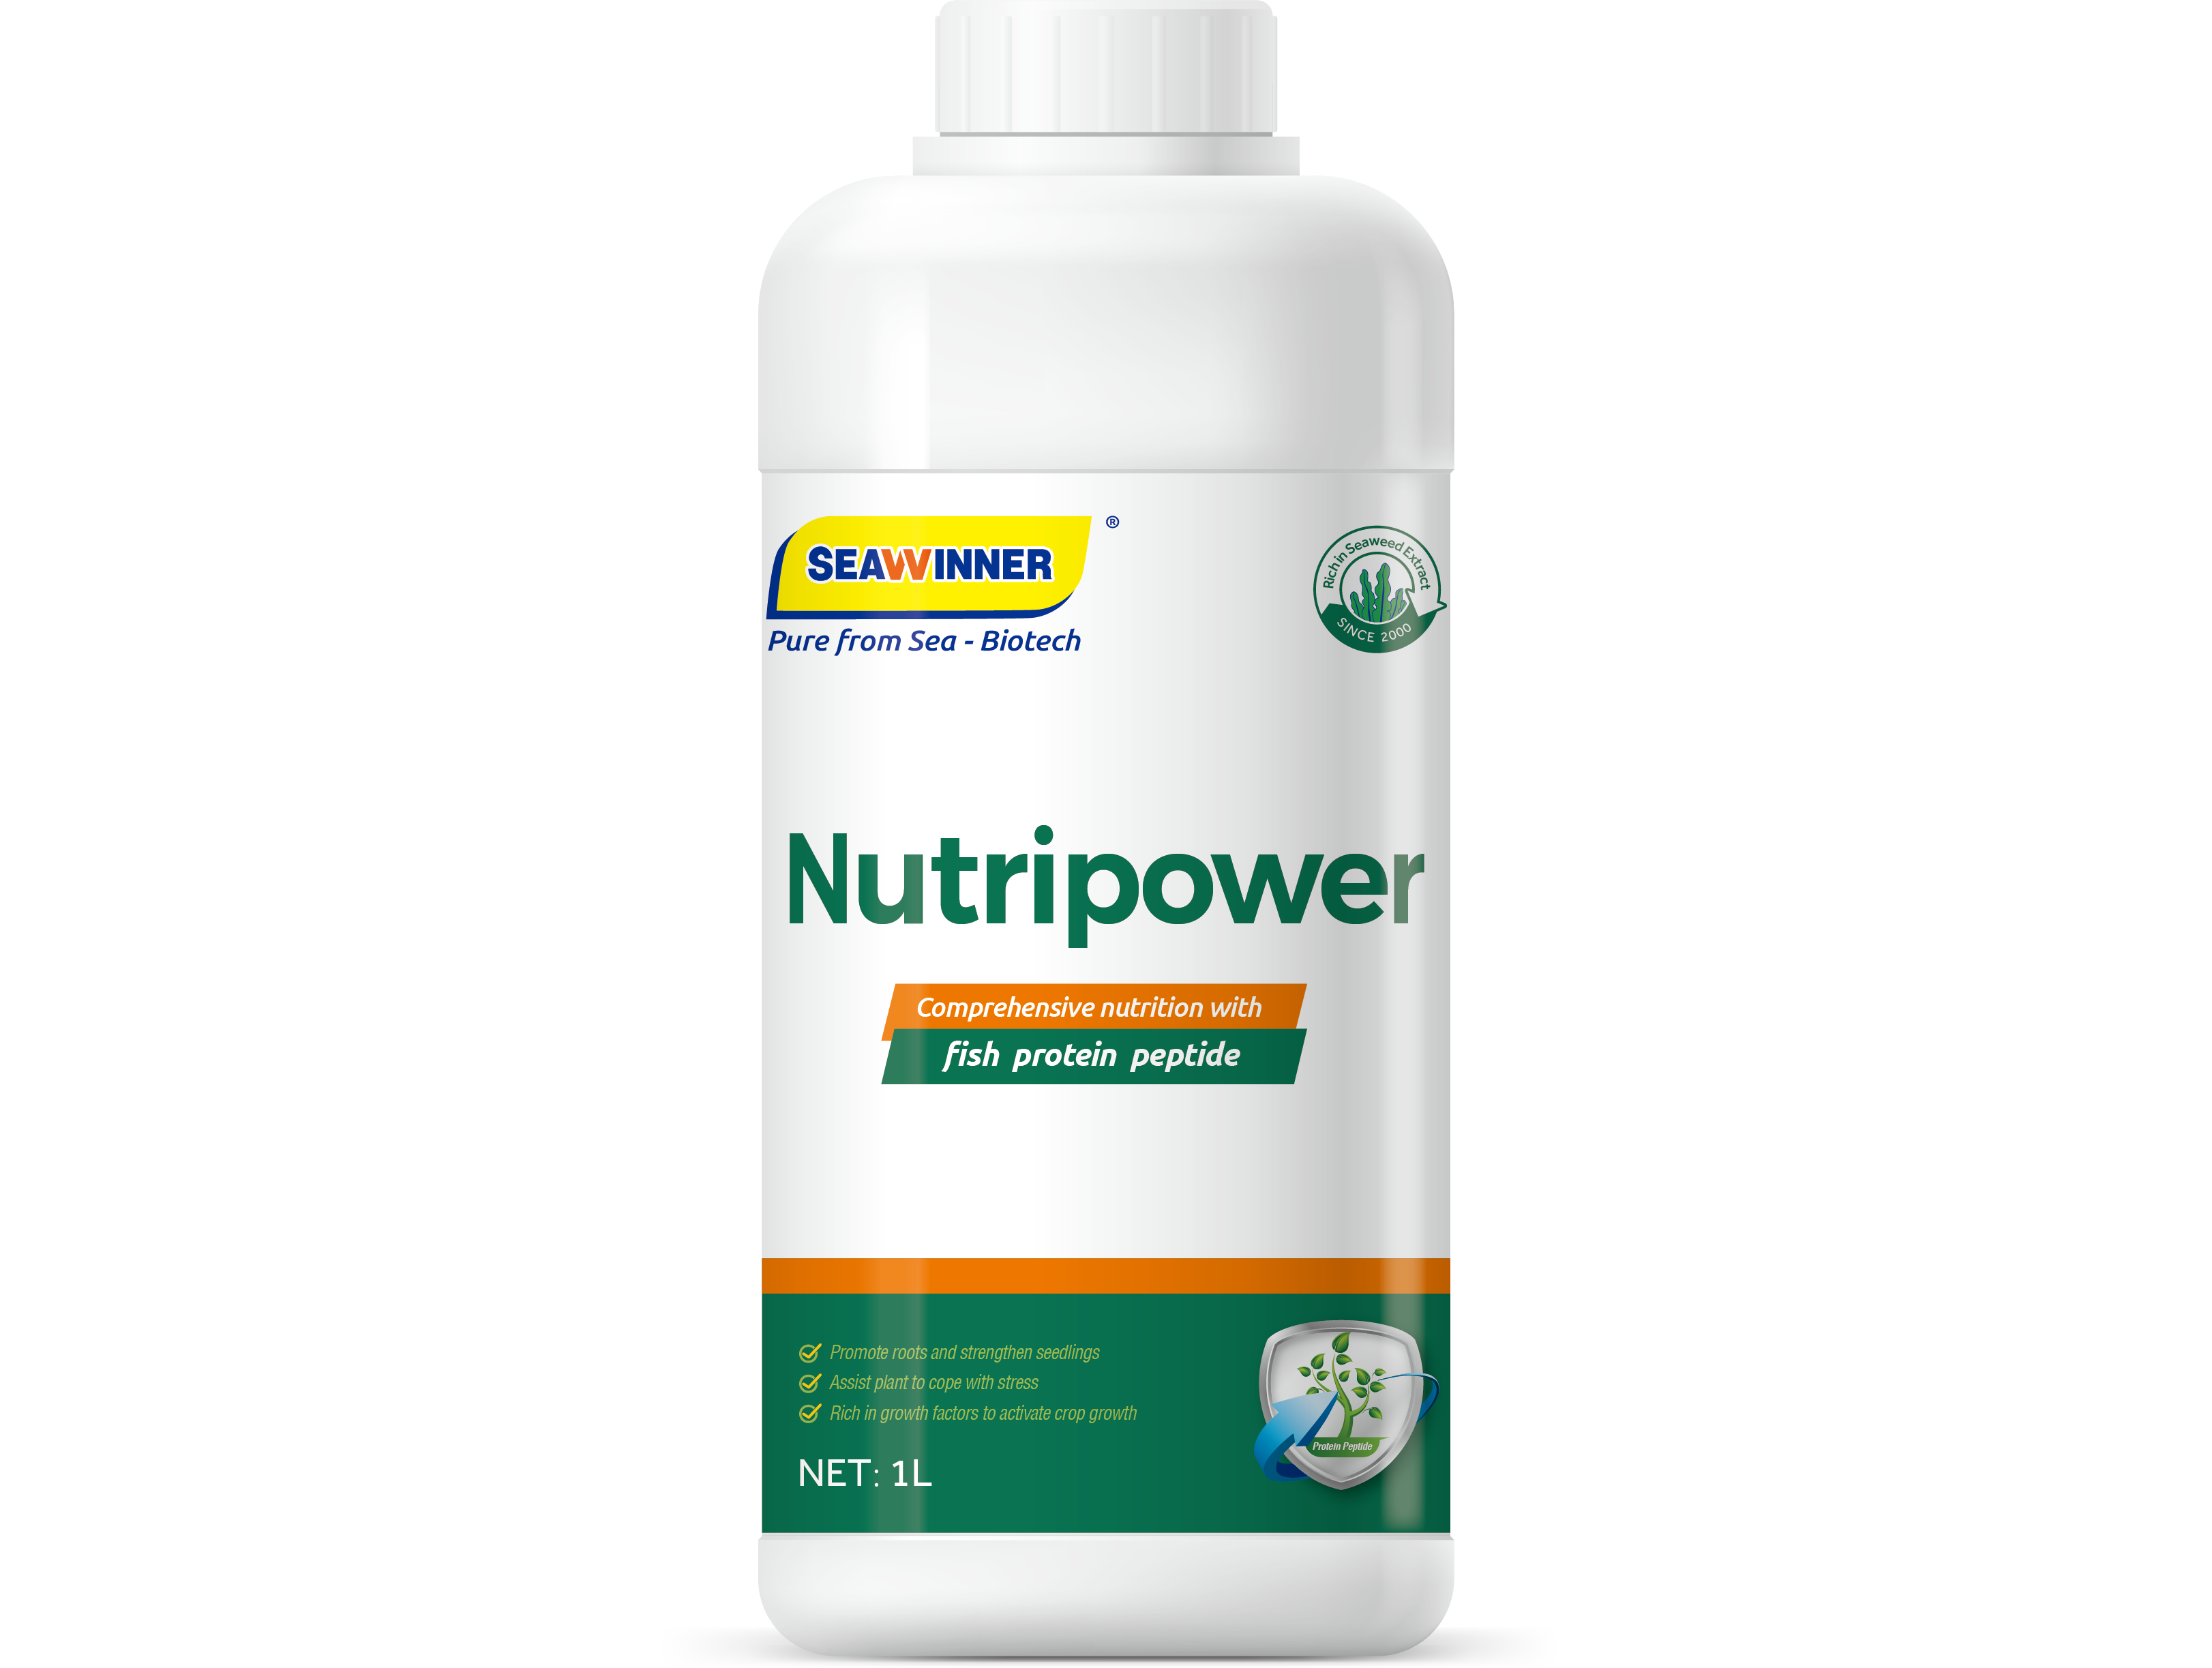 NutriPower